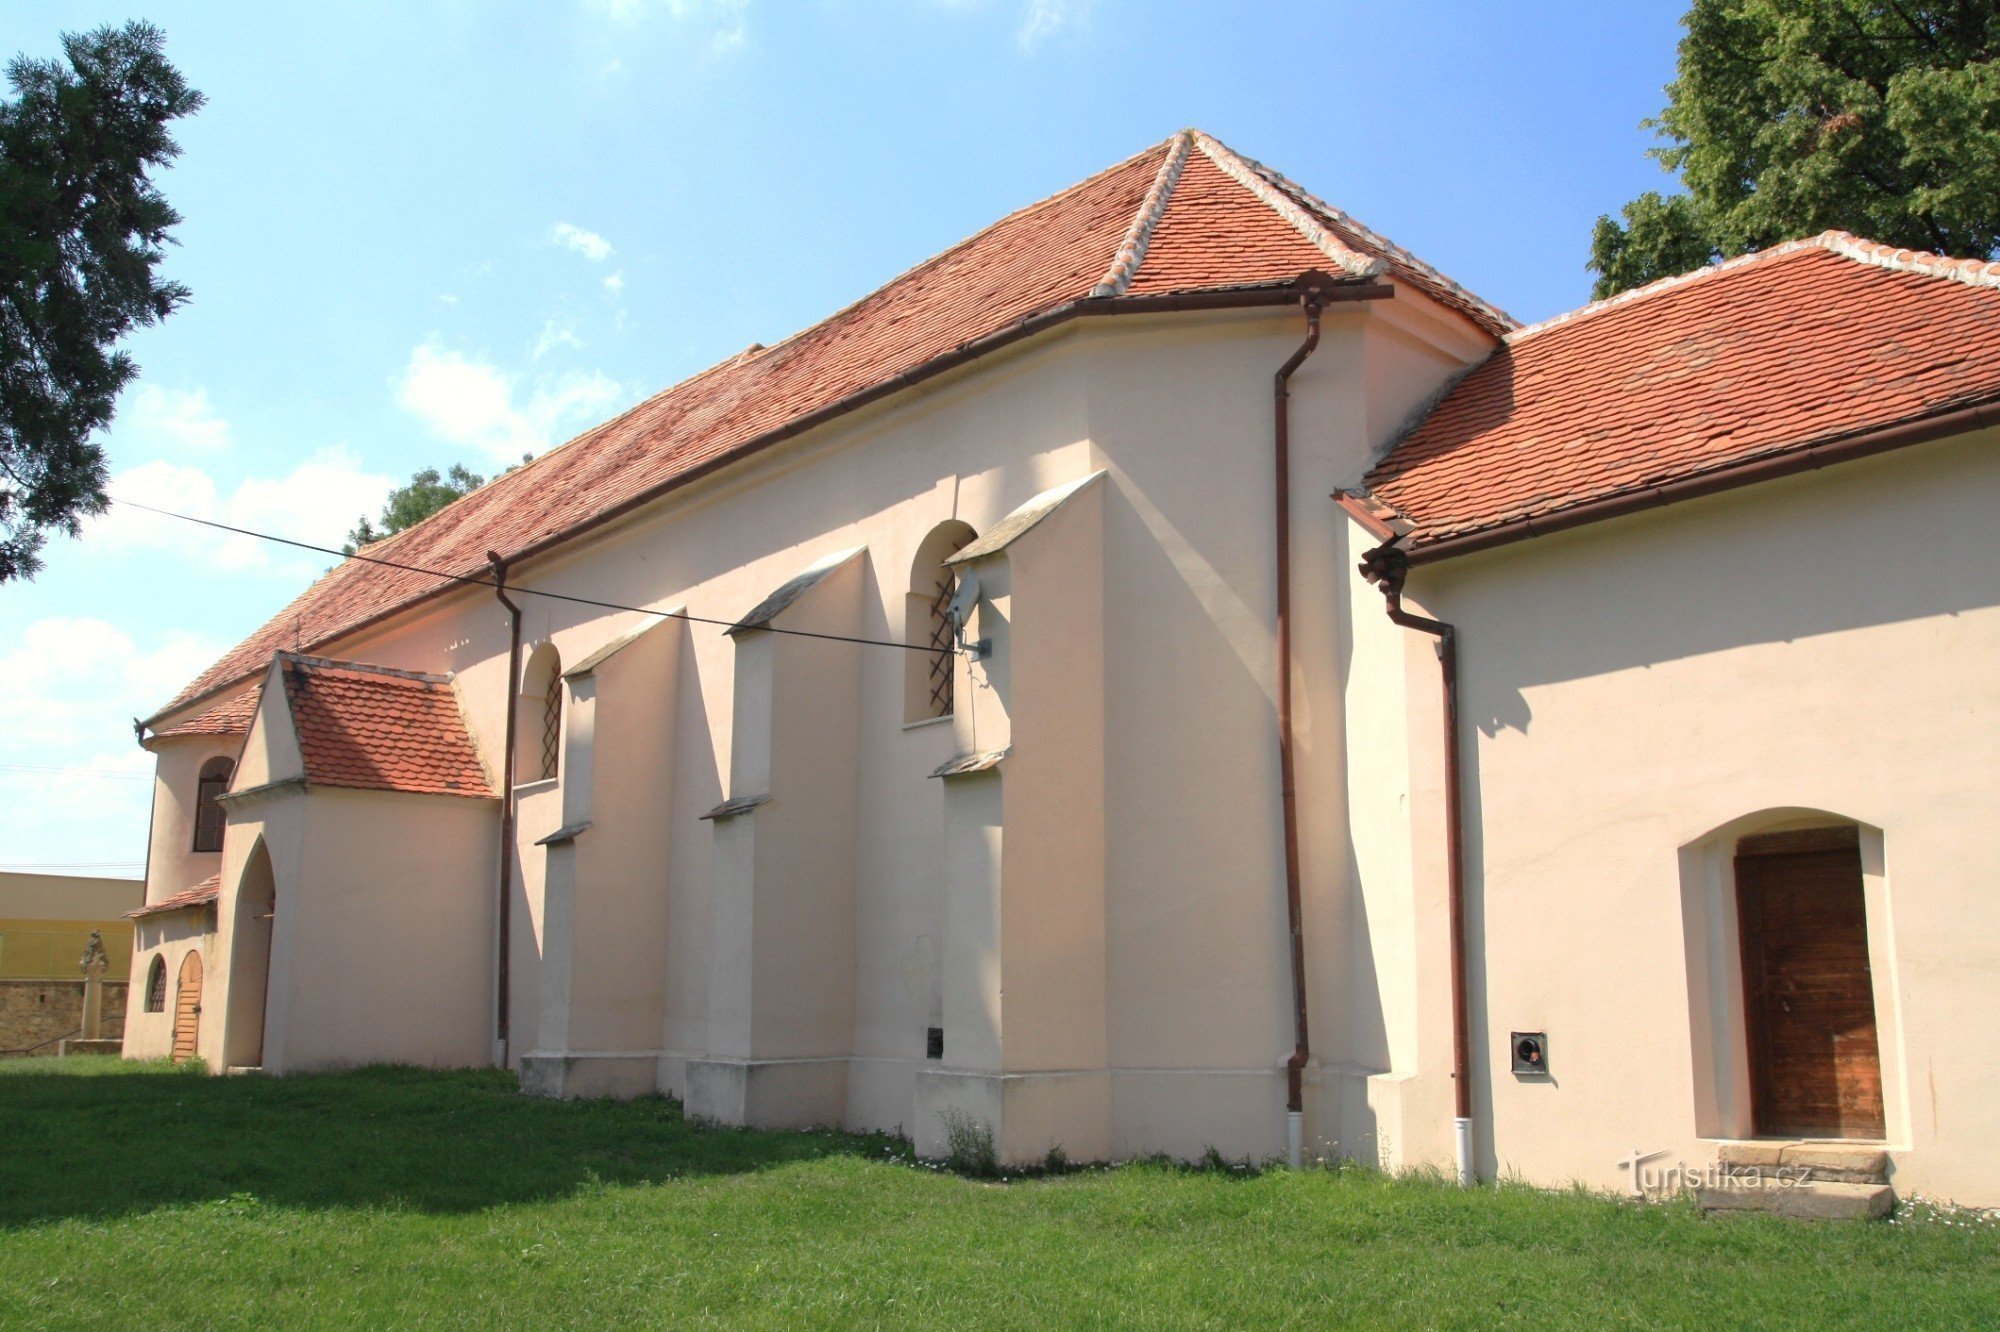 Přítluky - crkva sv. Tržišta s istoka